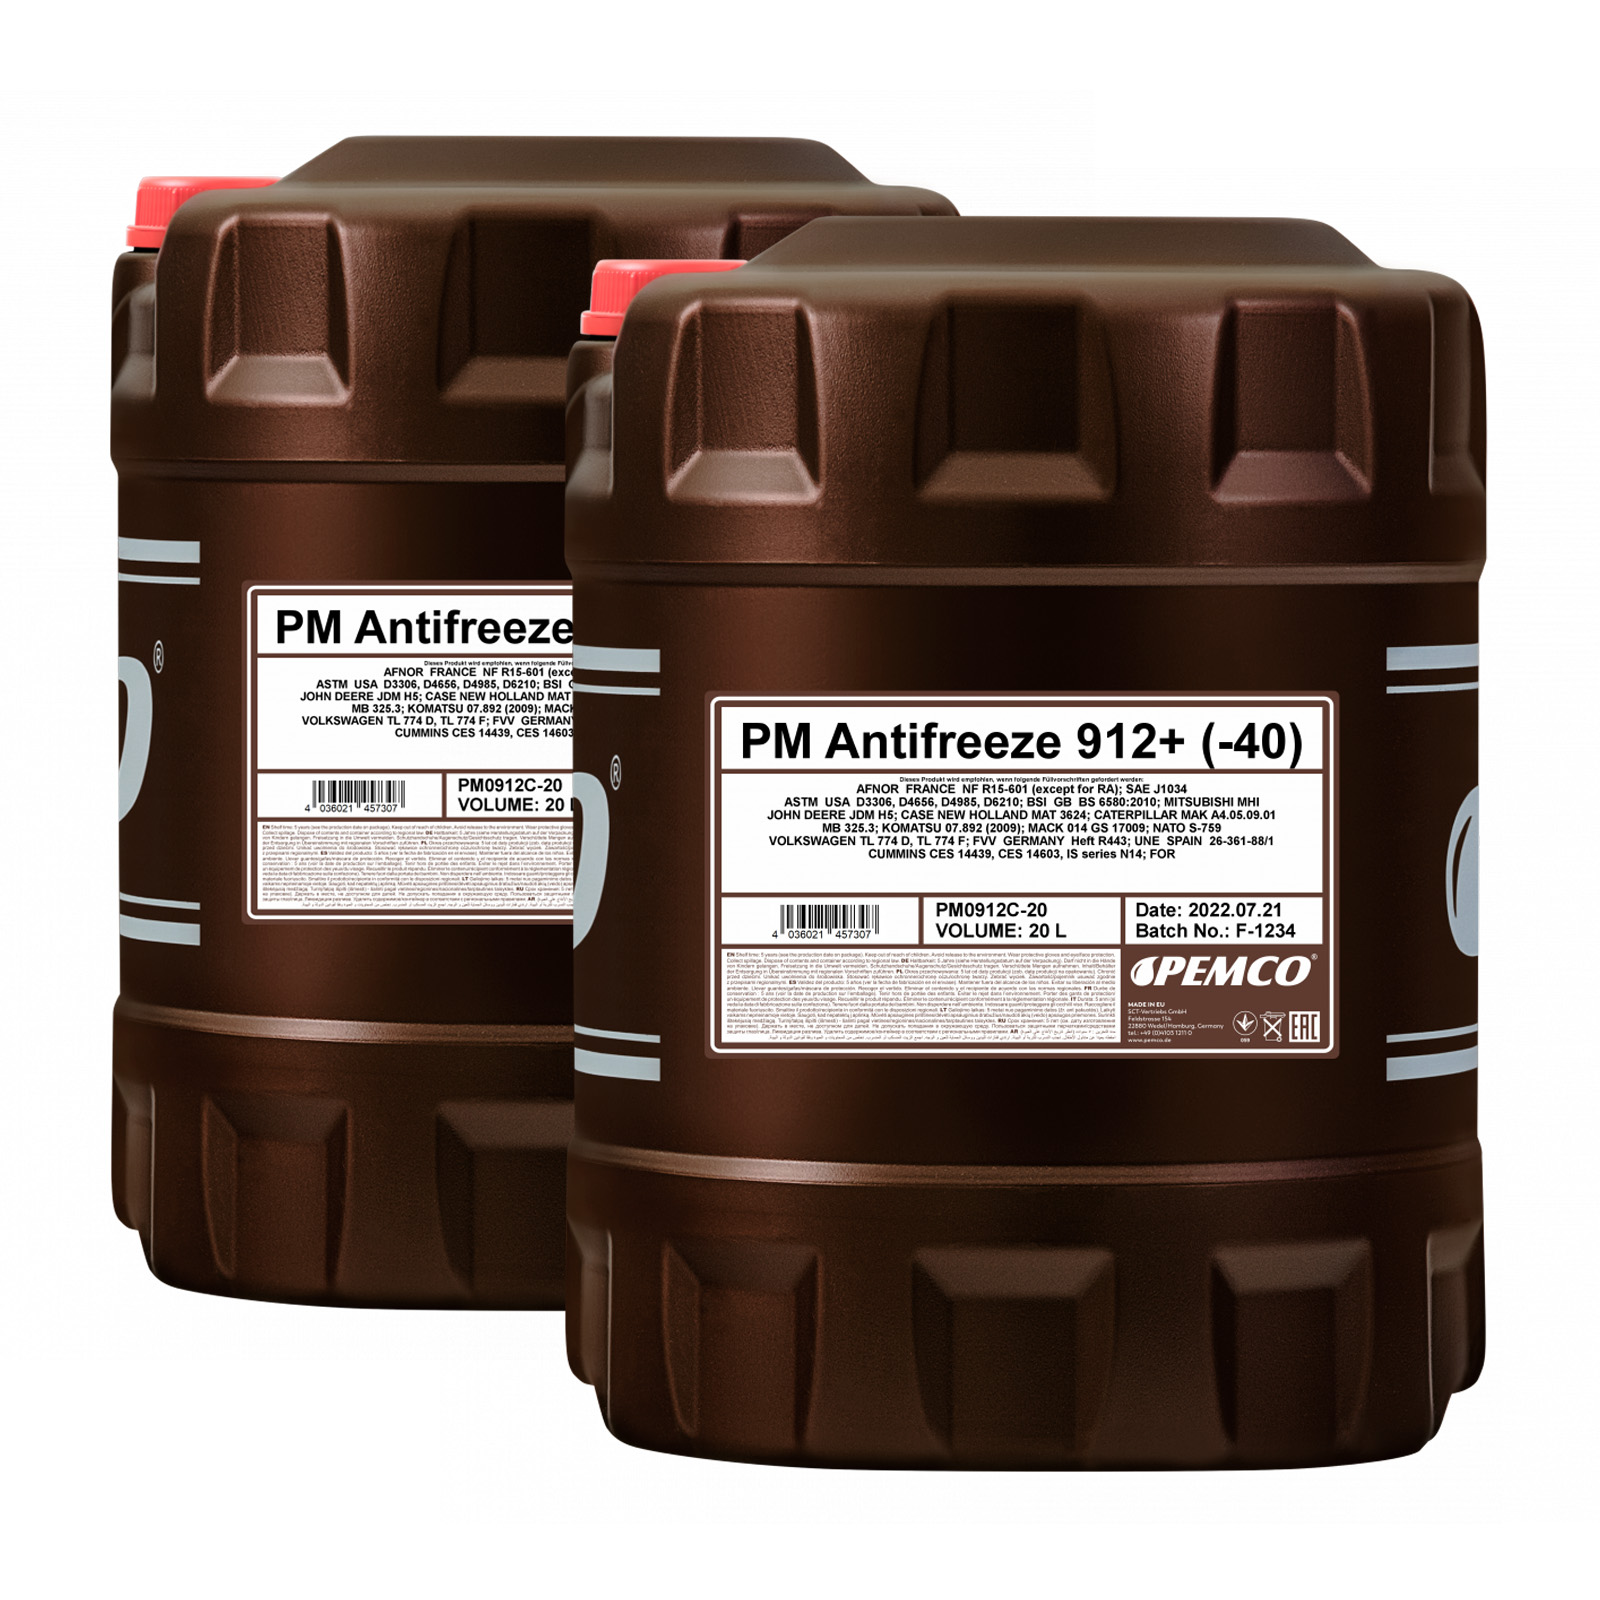 40 Liter (2x20) PEMCO ANTIFREEZE 912+ Kühlerfrostschutz Konzentrat rot